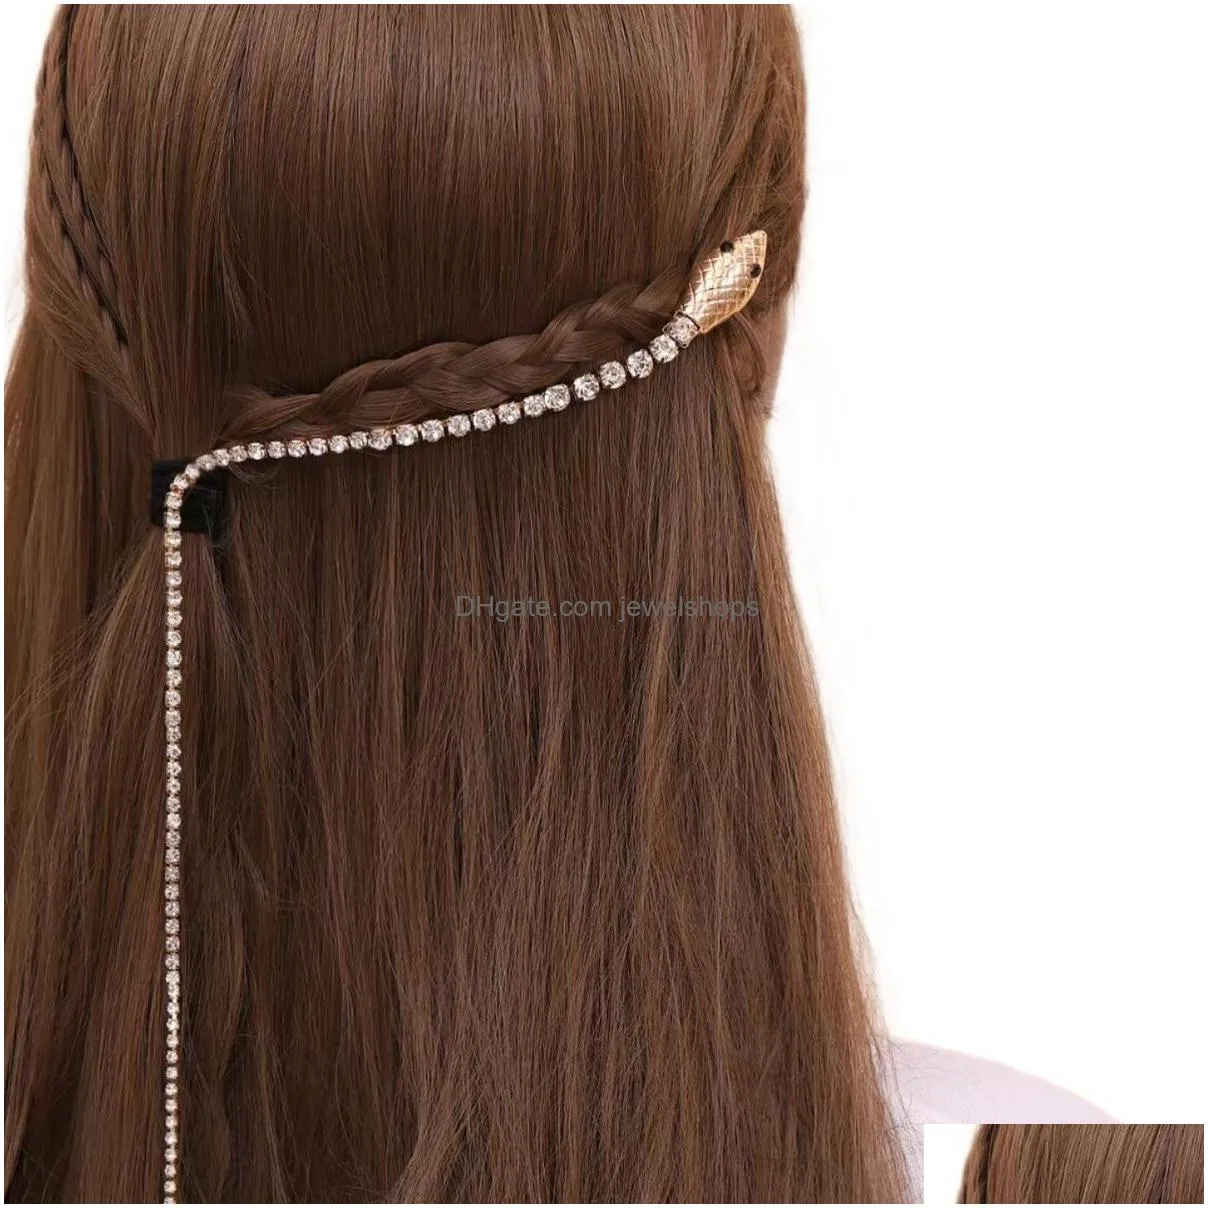 Hair Clips & Barrettes Snake Hairpins Hair Clips For Women Girls Rhinestone Tassel Pins Accessories Fashion Design Gold Sier Bling Cla Dhvja